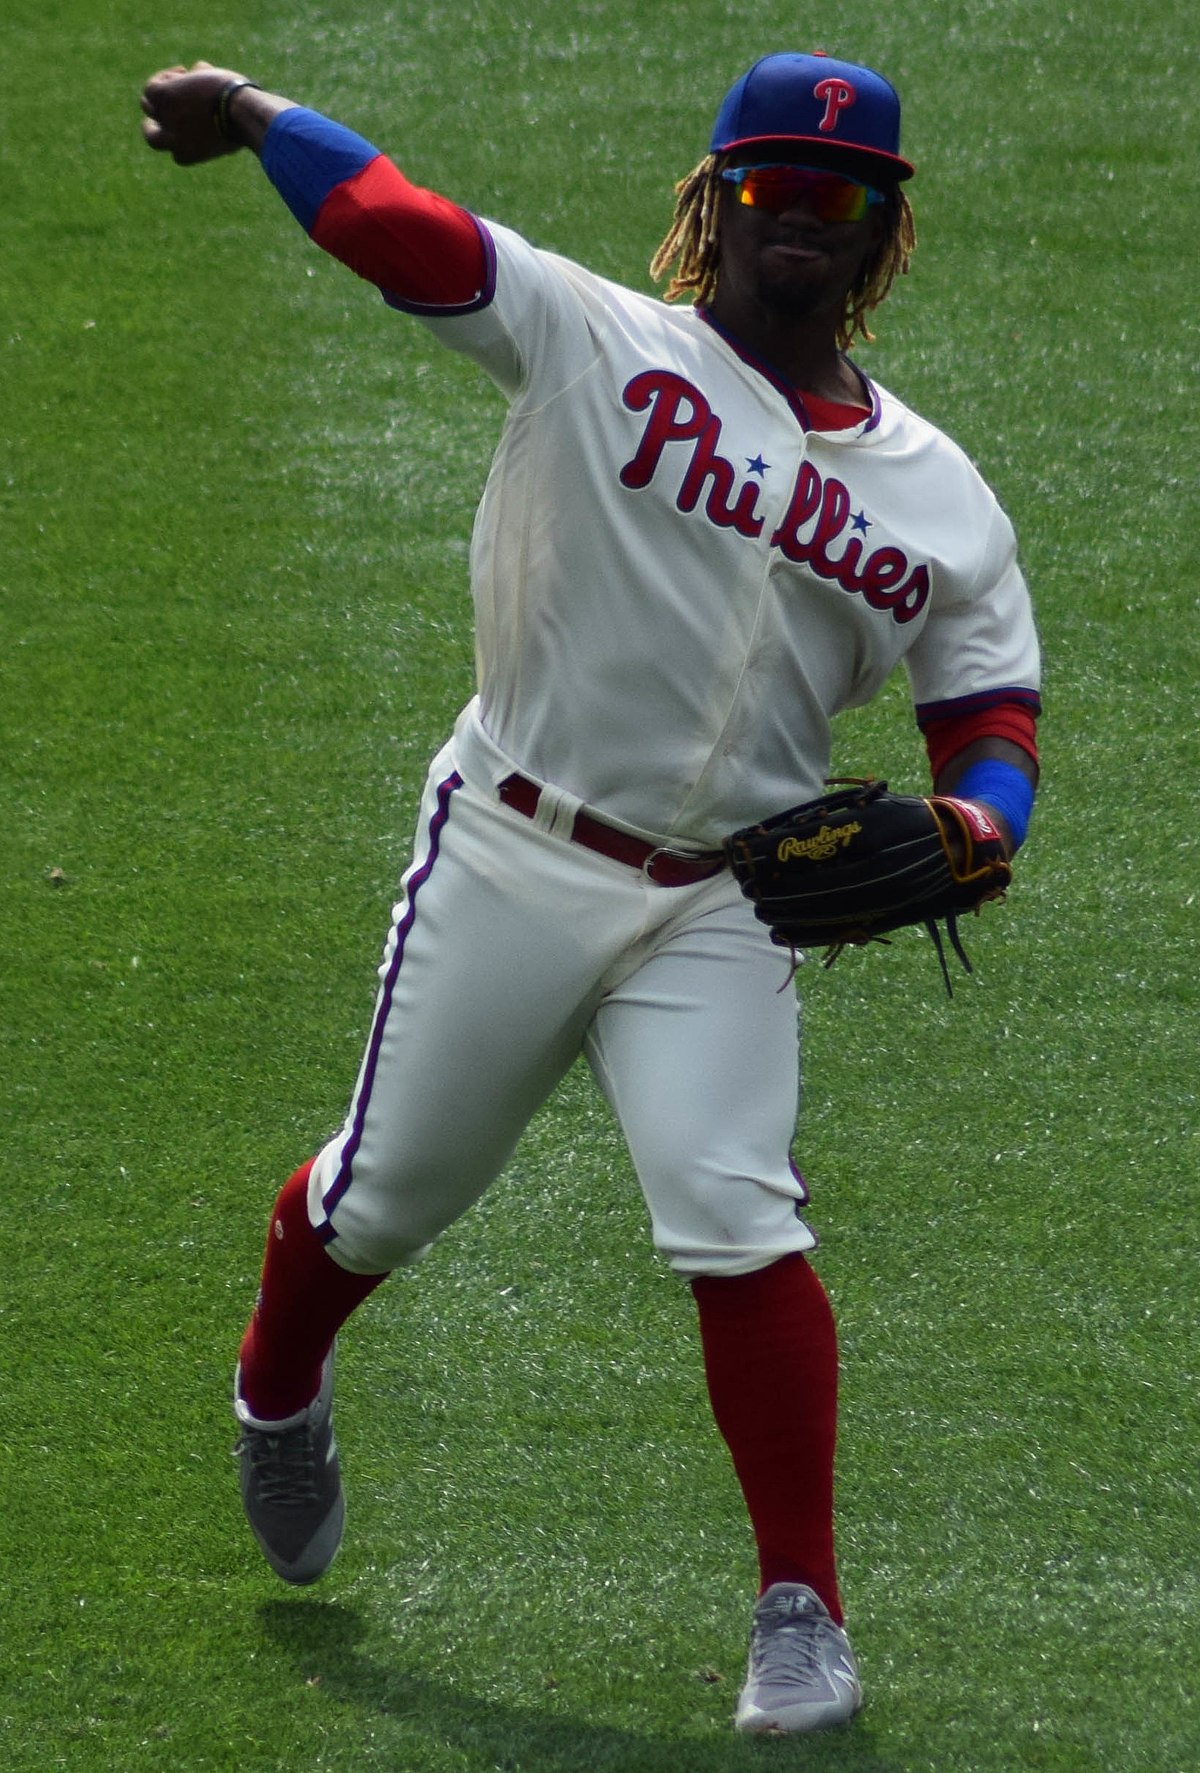 Philadelphia Phillies - Wikipedia